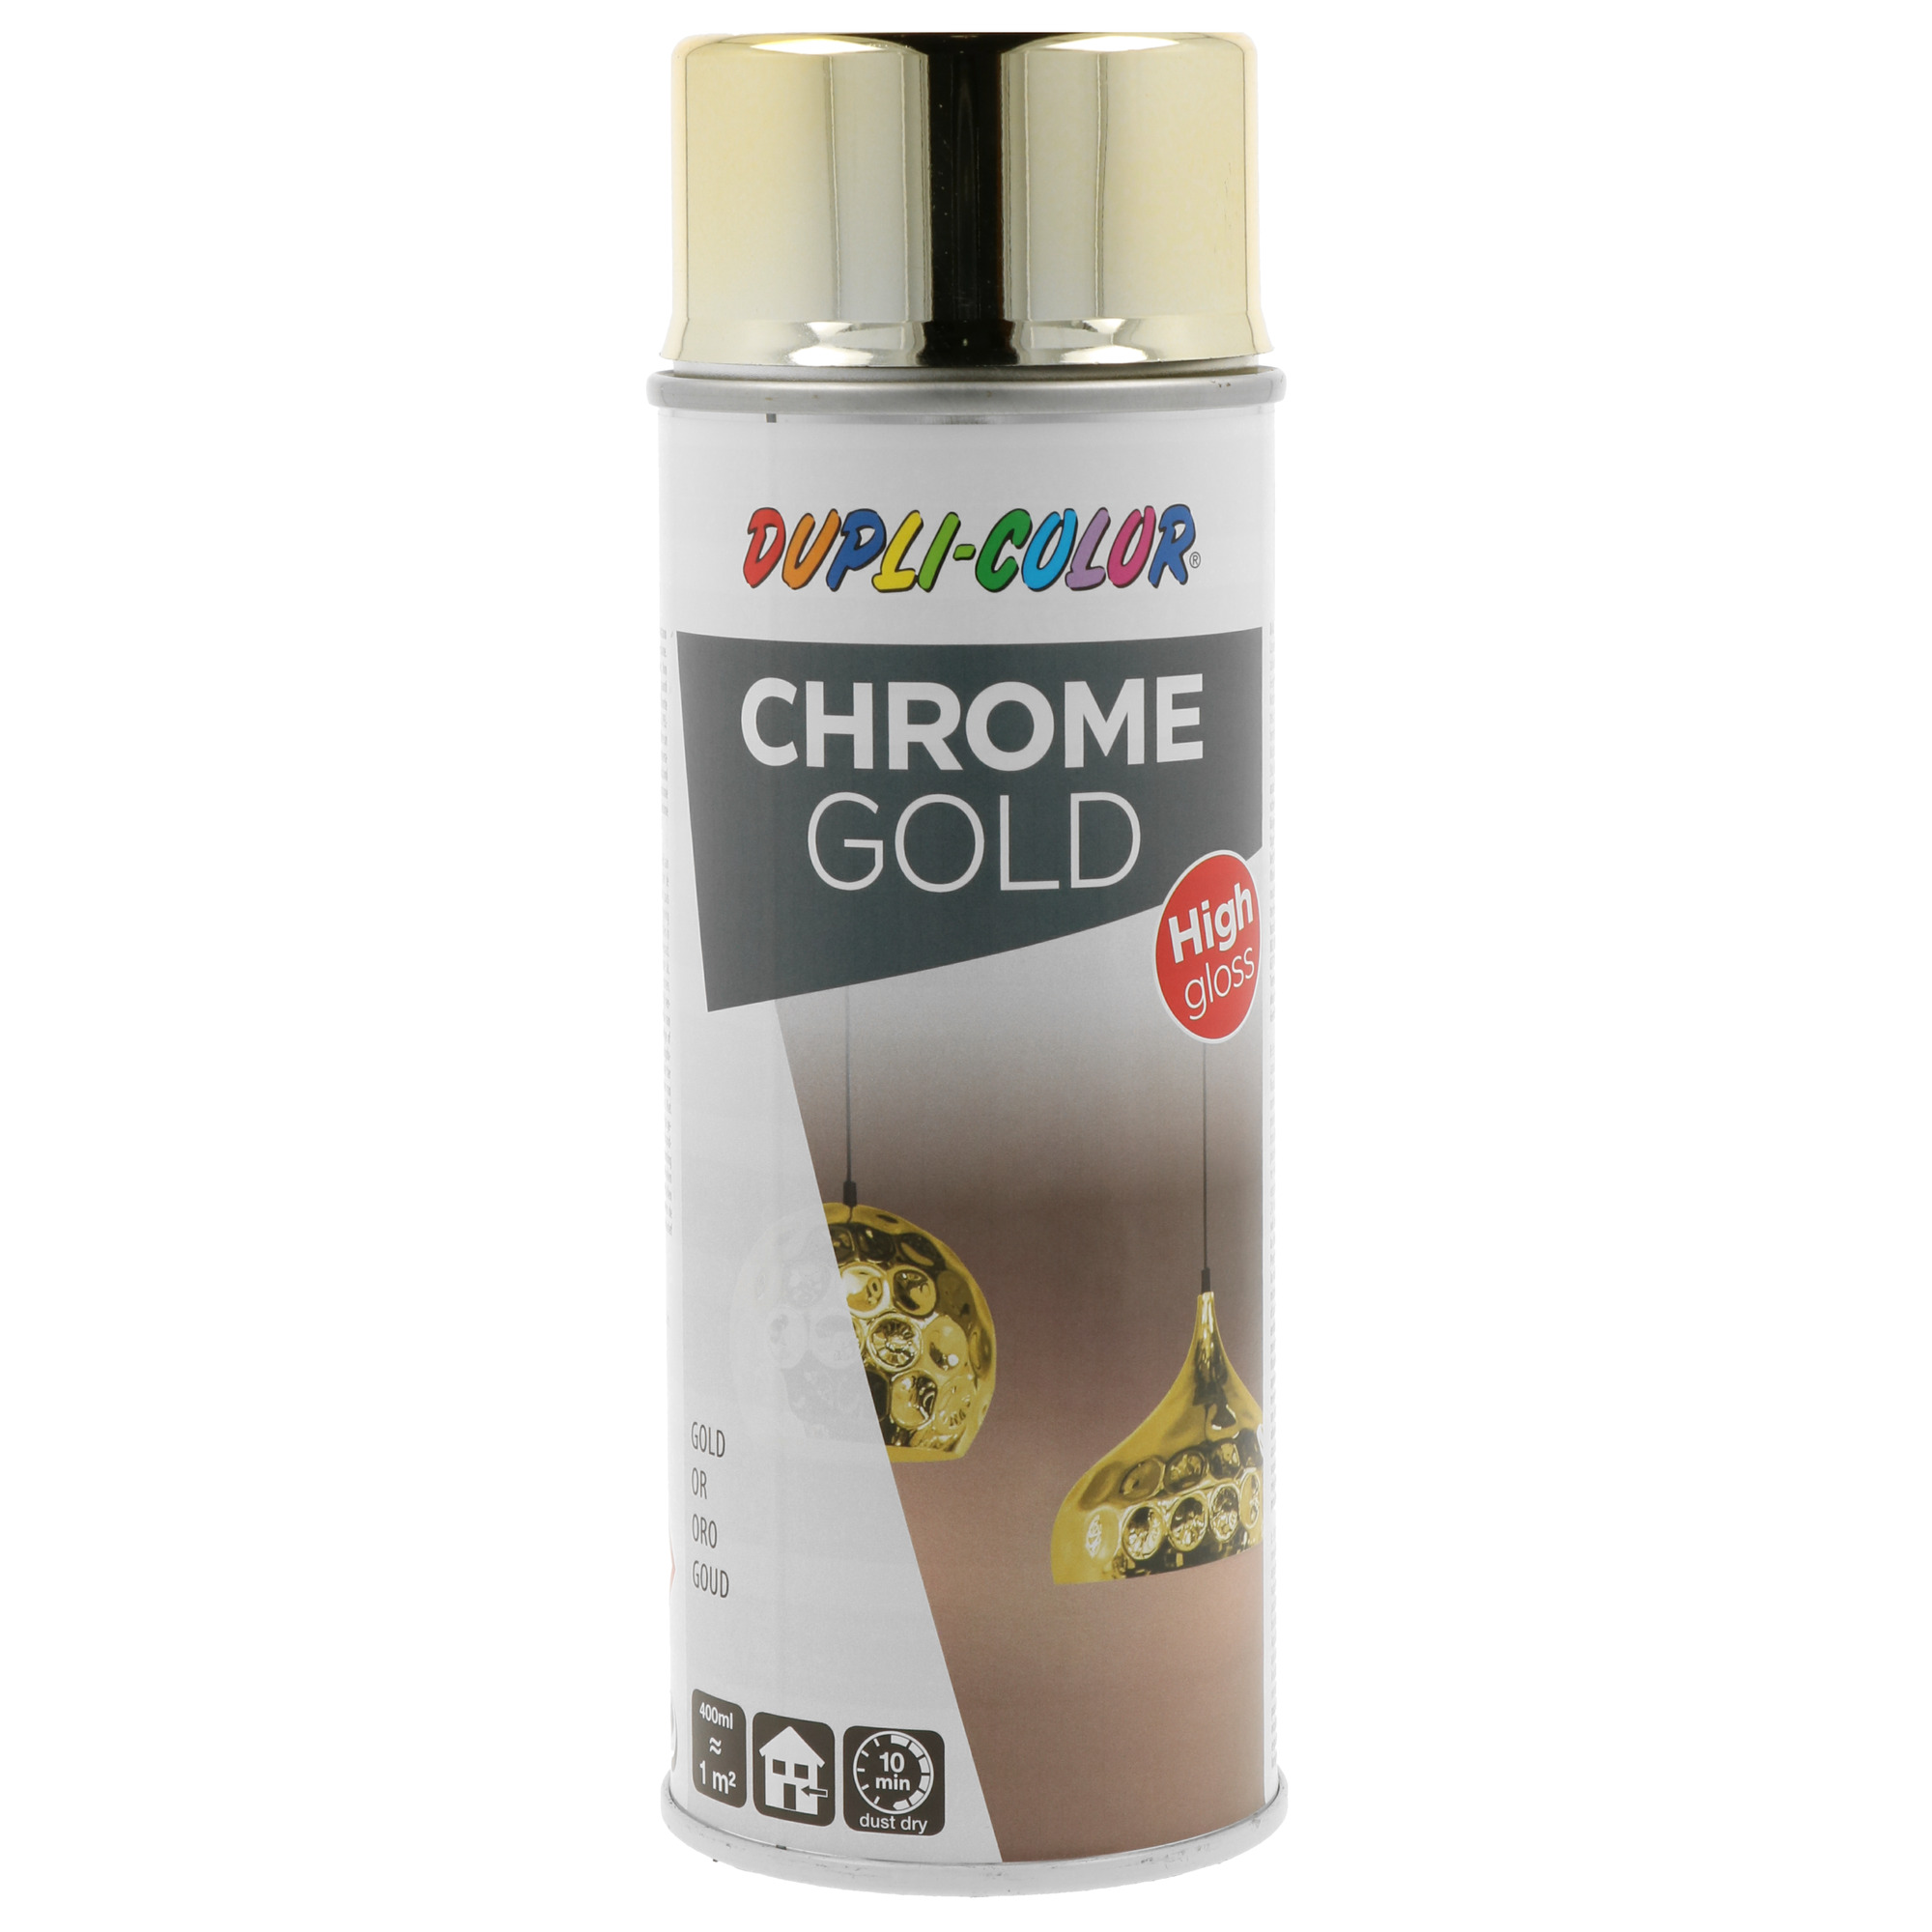 CHROME GOLD 400